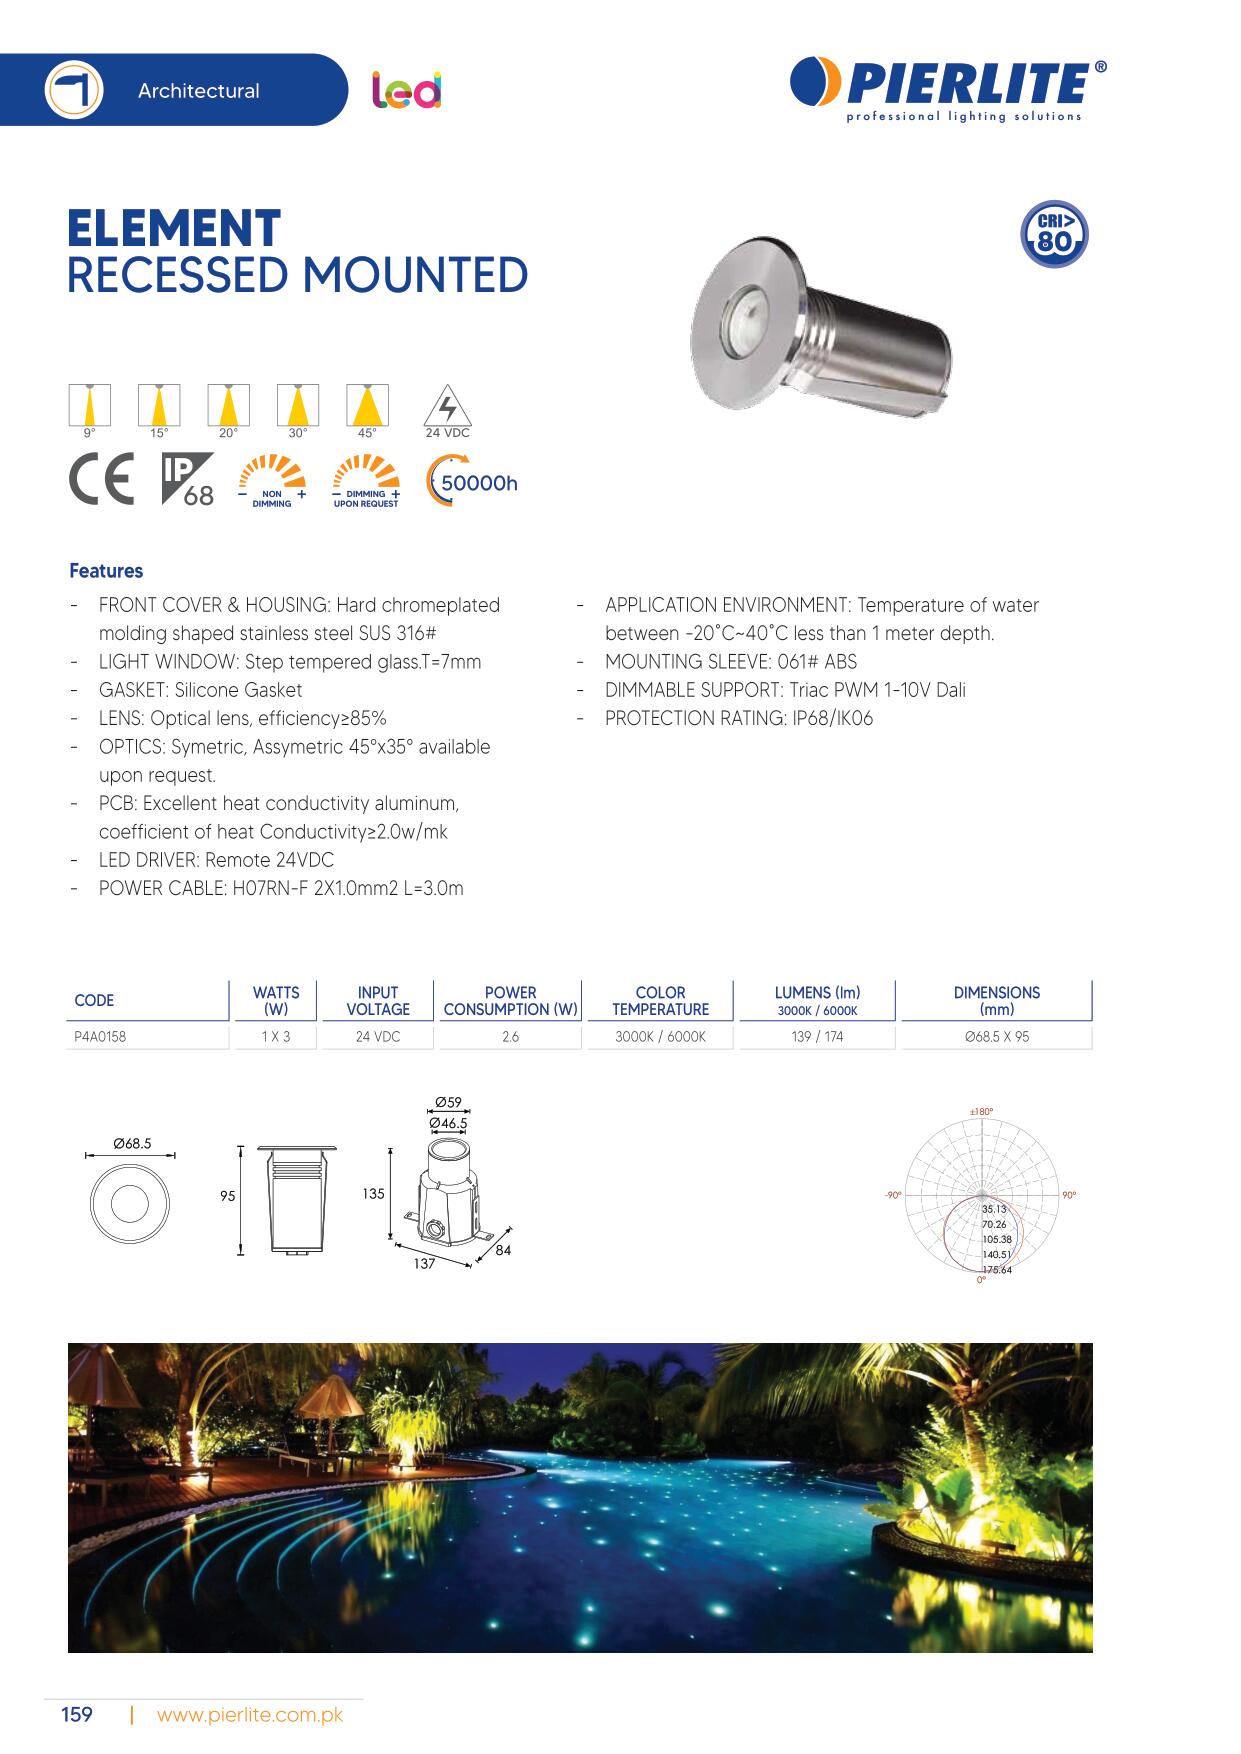 Pierlite LED Luminaire Catalog 2021-168